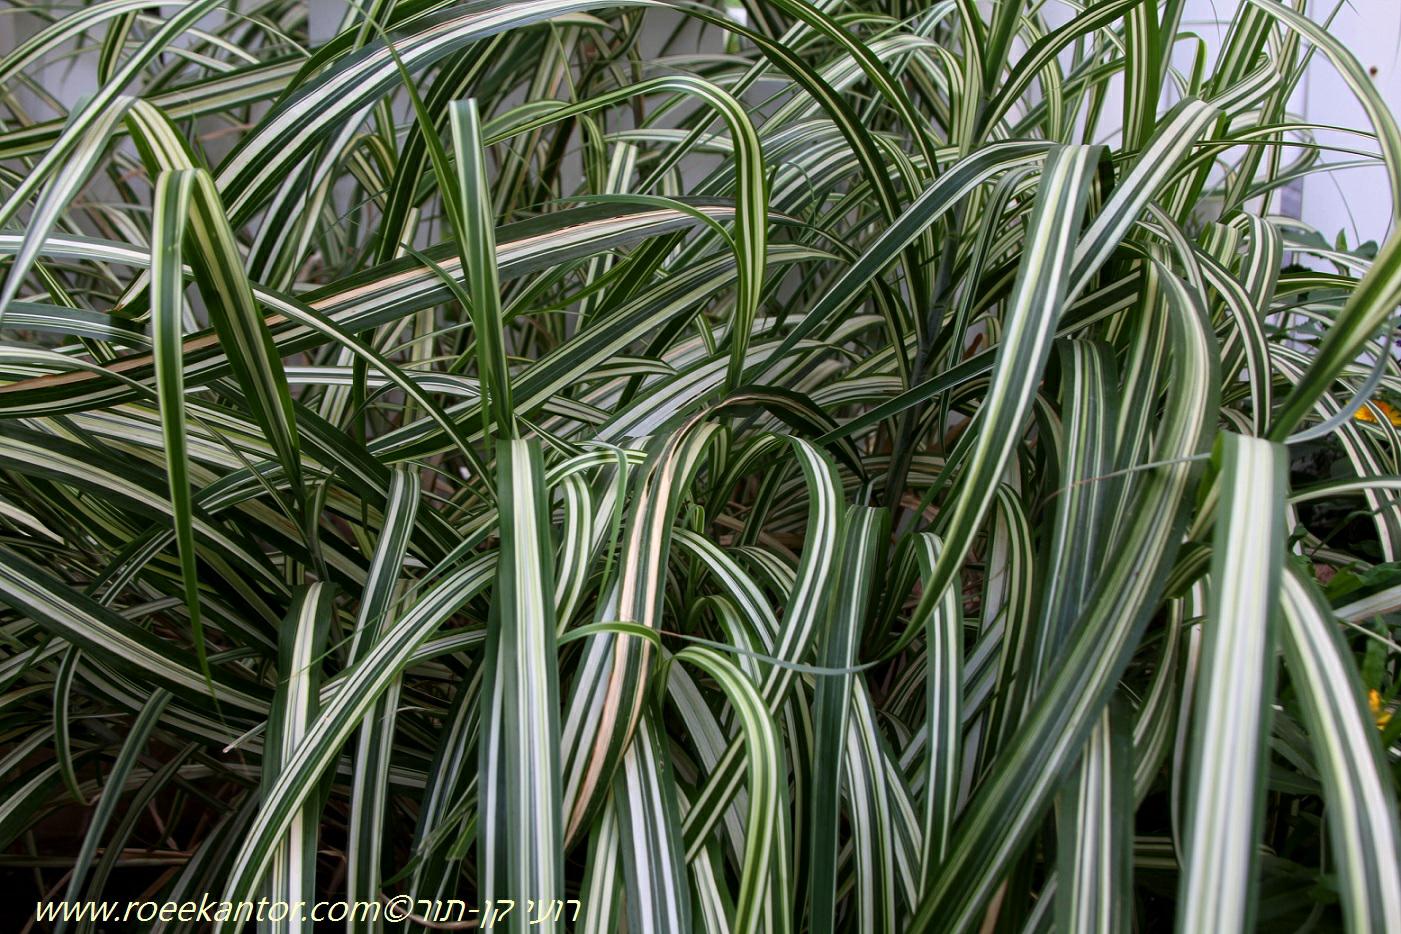 Miscanthus sinensis 'Variegatus' - Variegated maiden Grass, Variegated Japanese Silver Grass, מיסקנתוס סיני 'מגוון', מיסקנתוס סיני 'מגוון'